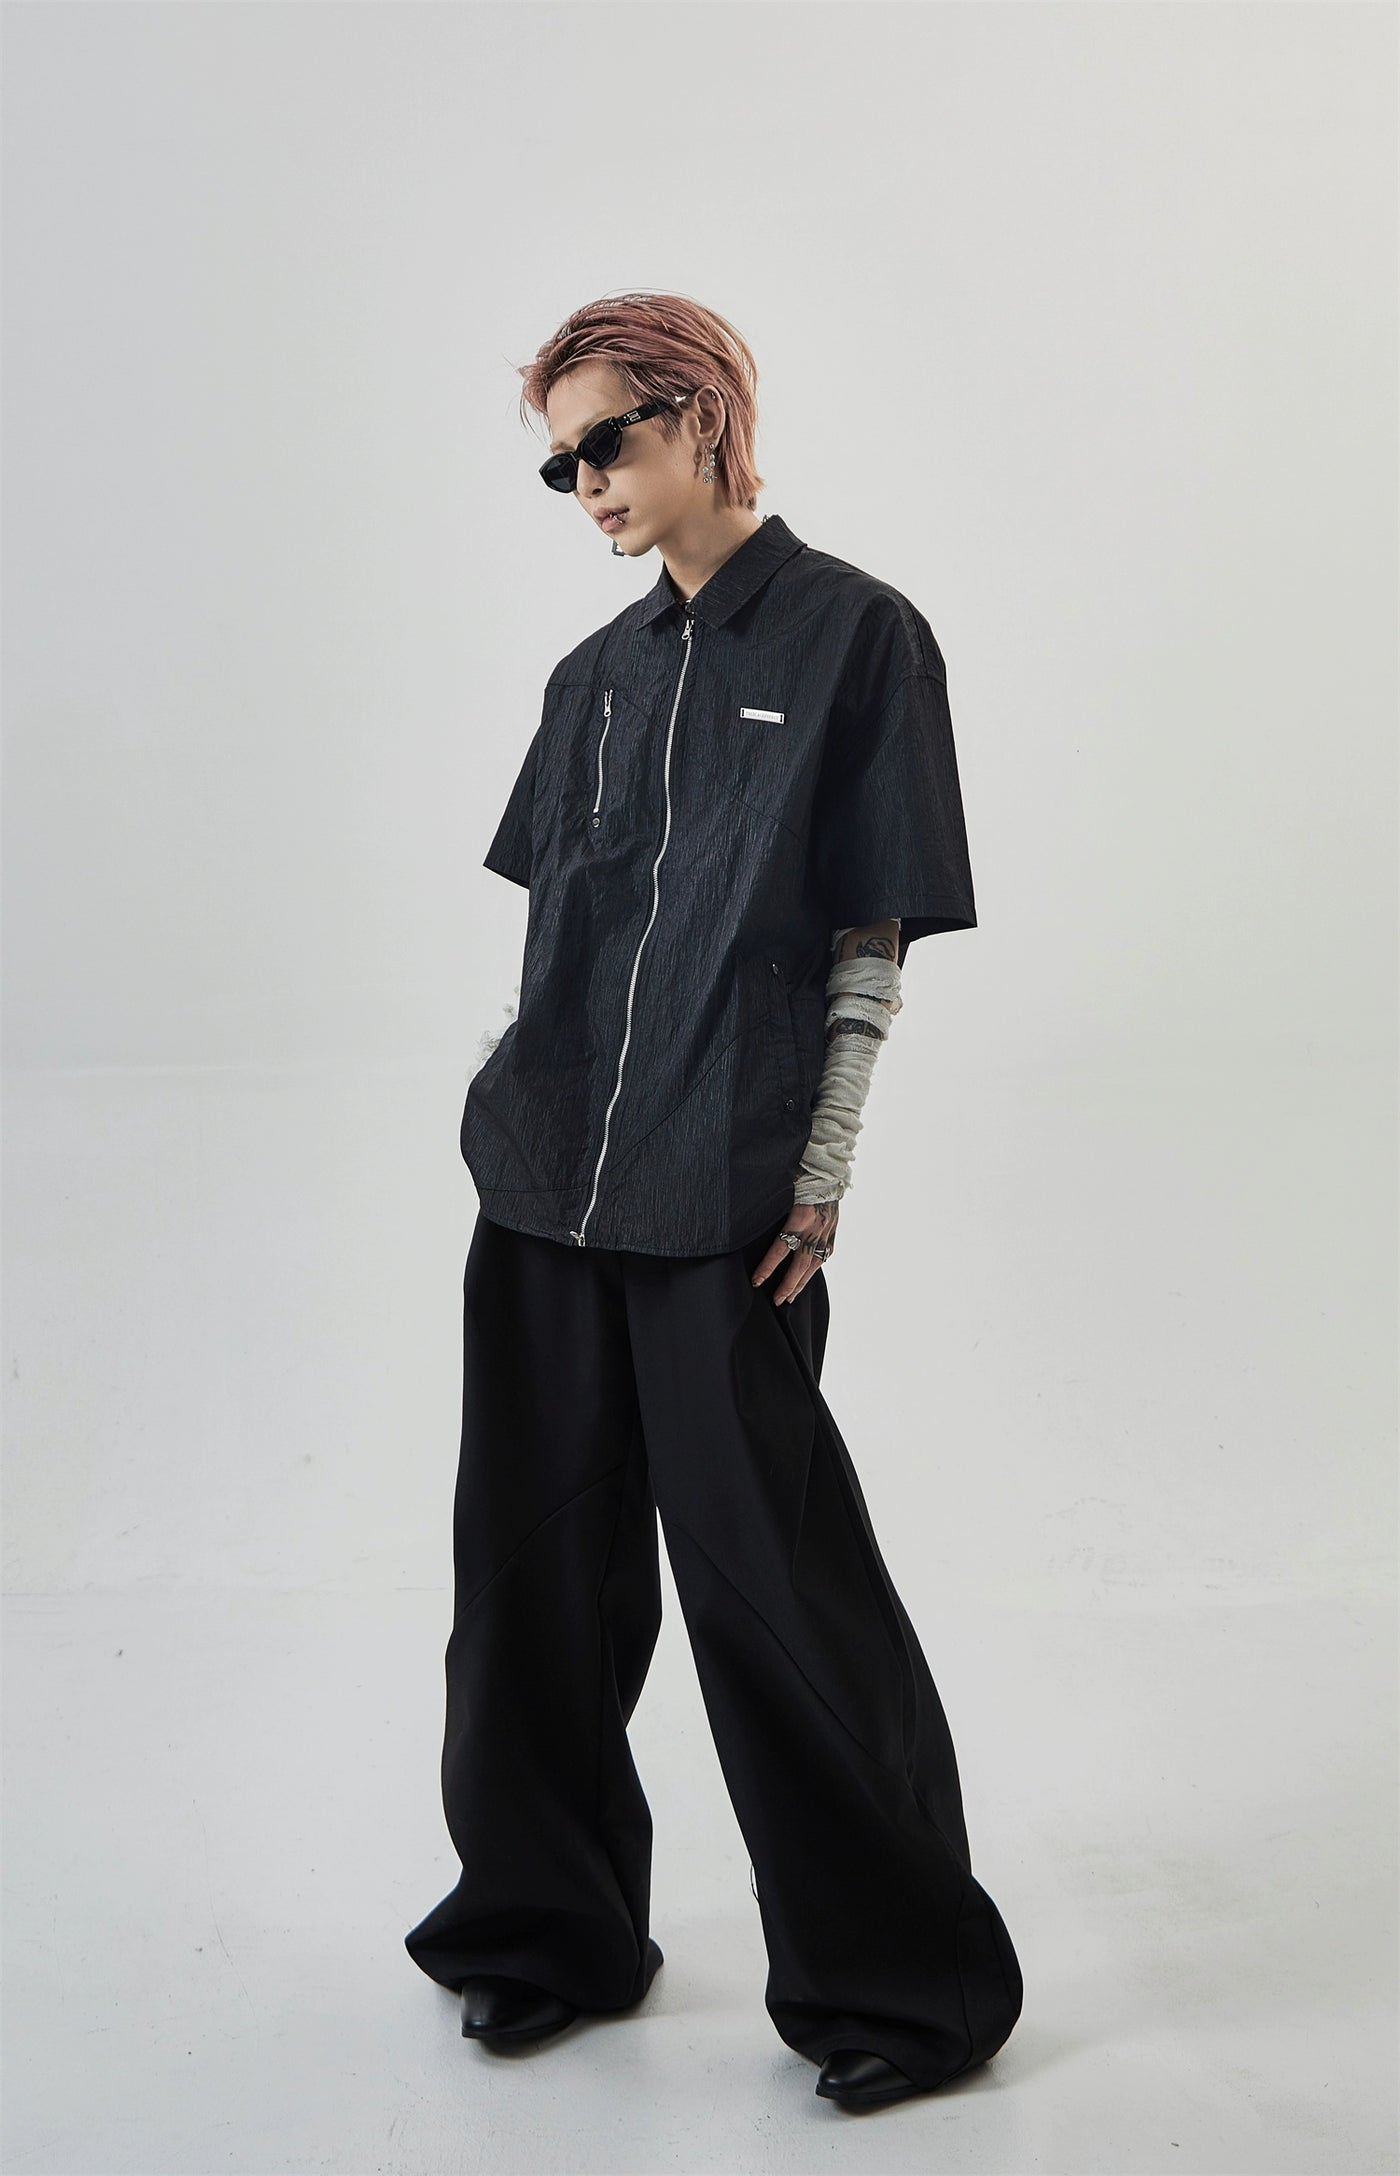 Textured and Zippered Shirt Korean Street Fashion Shirt By Ash Dark Shop Online at OH Vault